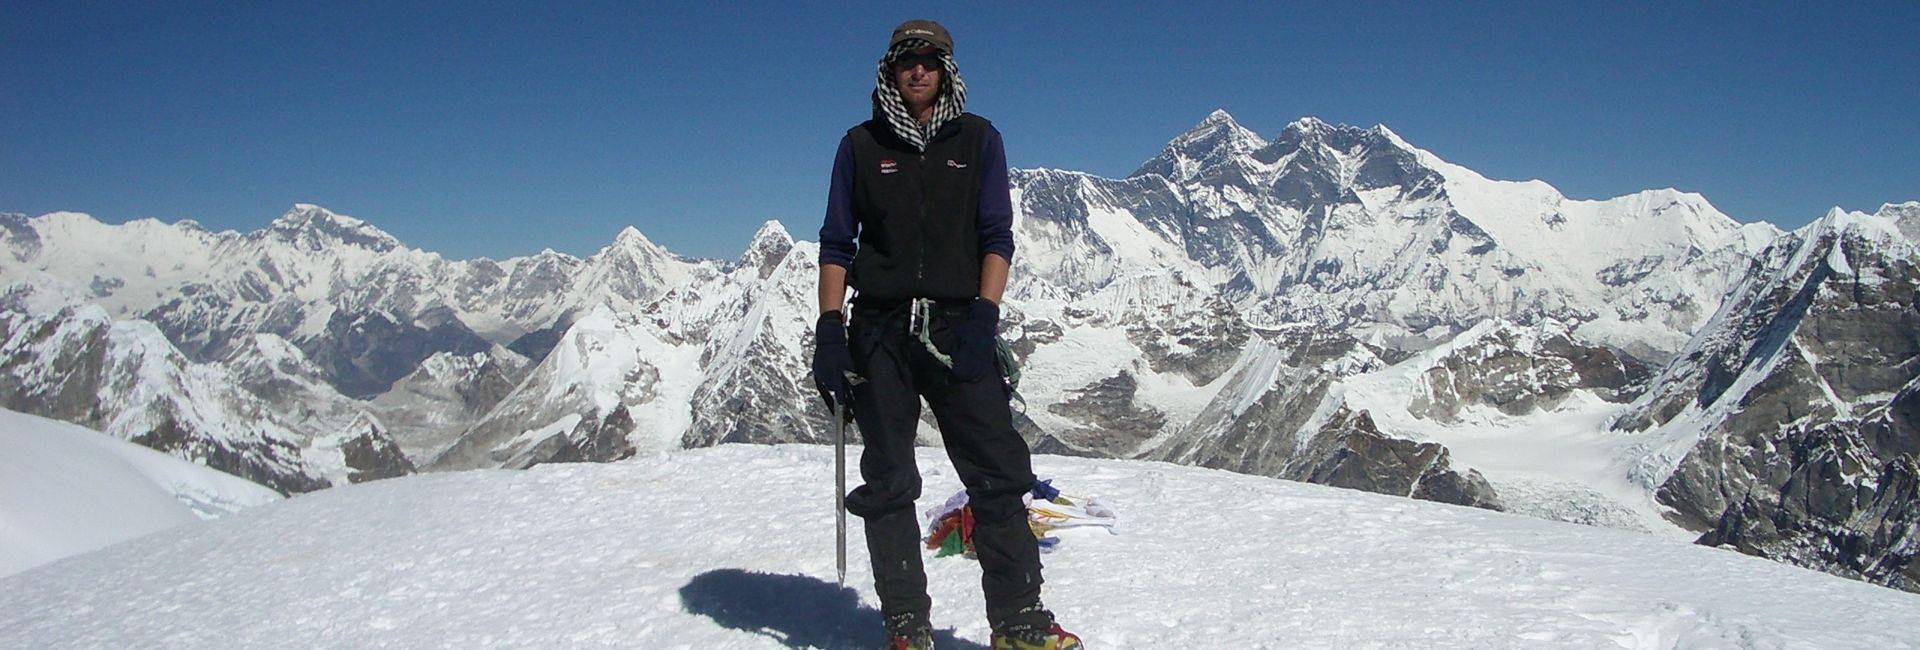 Mera Peak expedition in Nepal